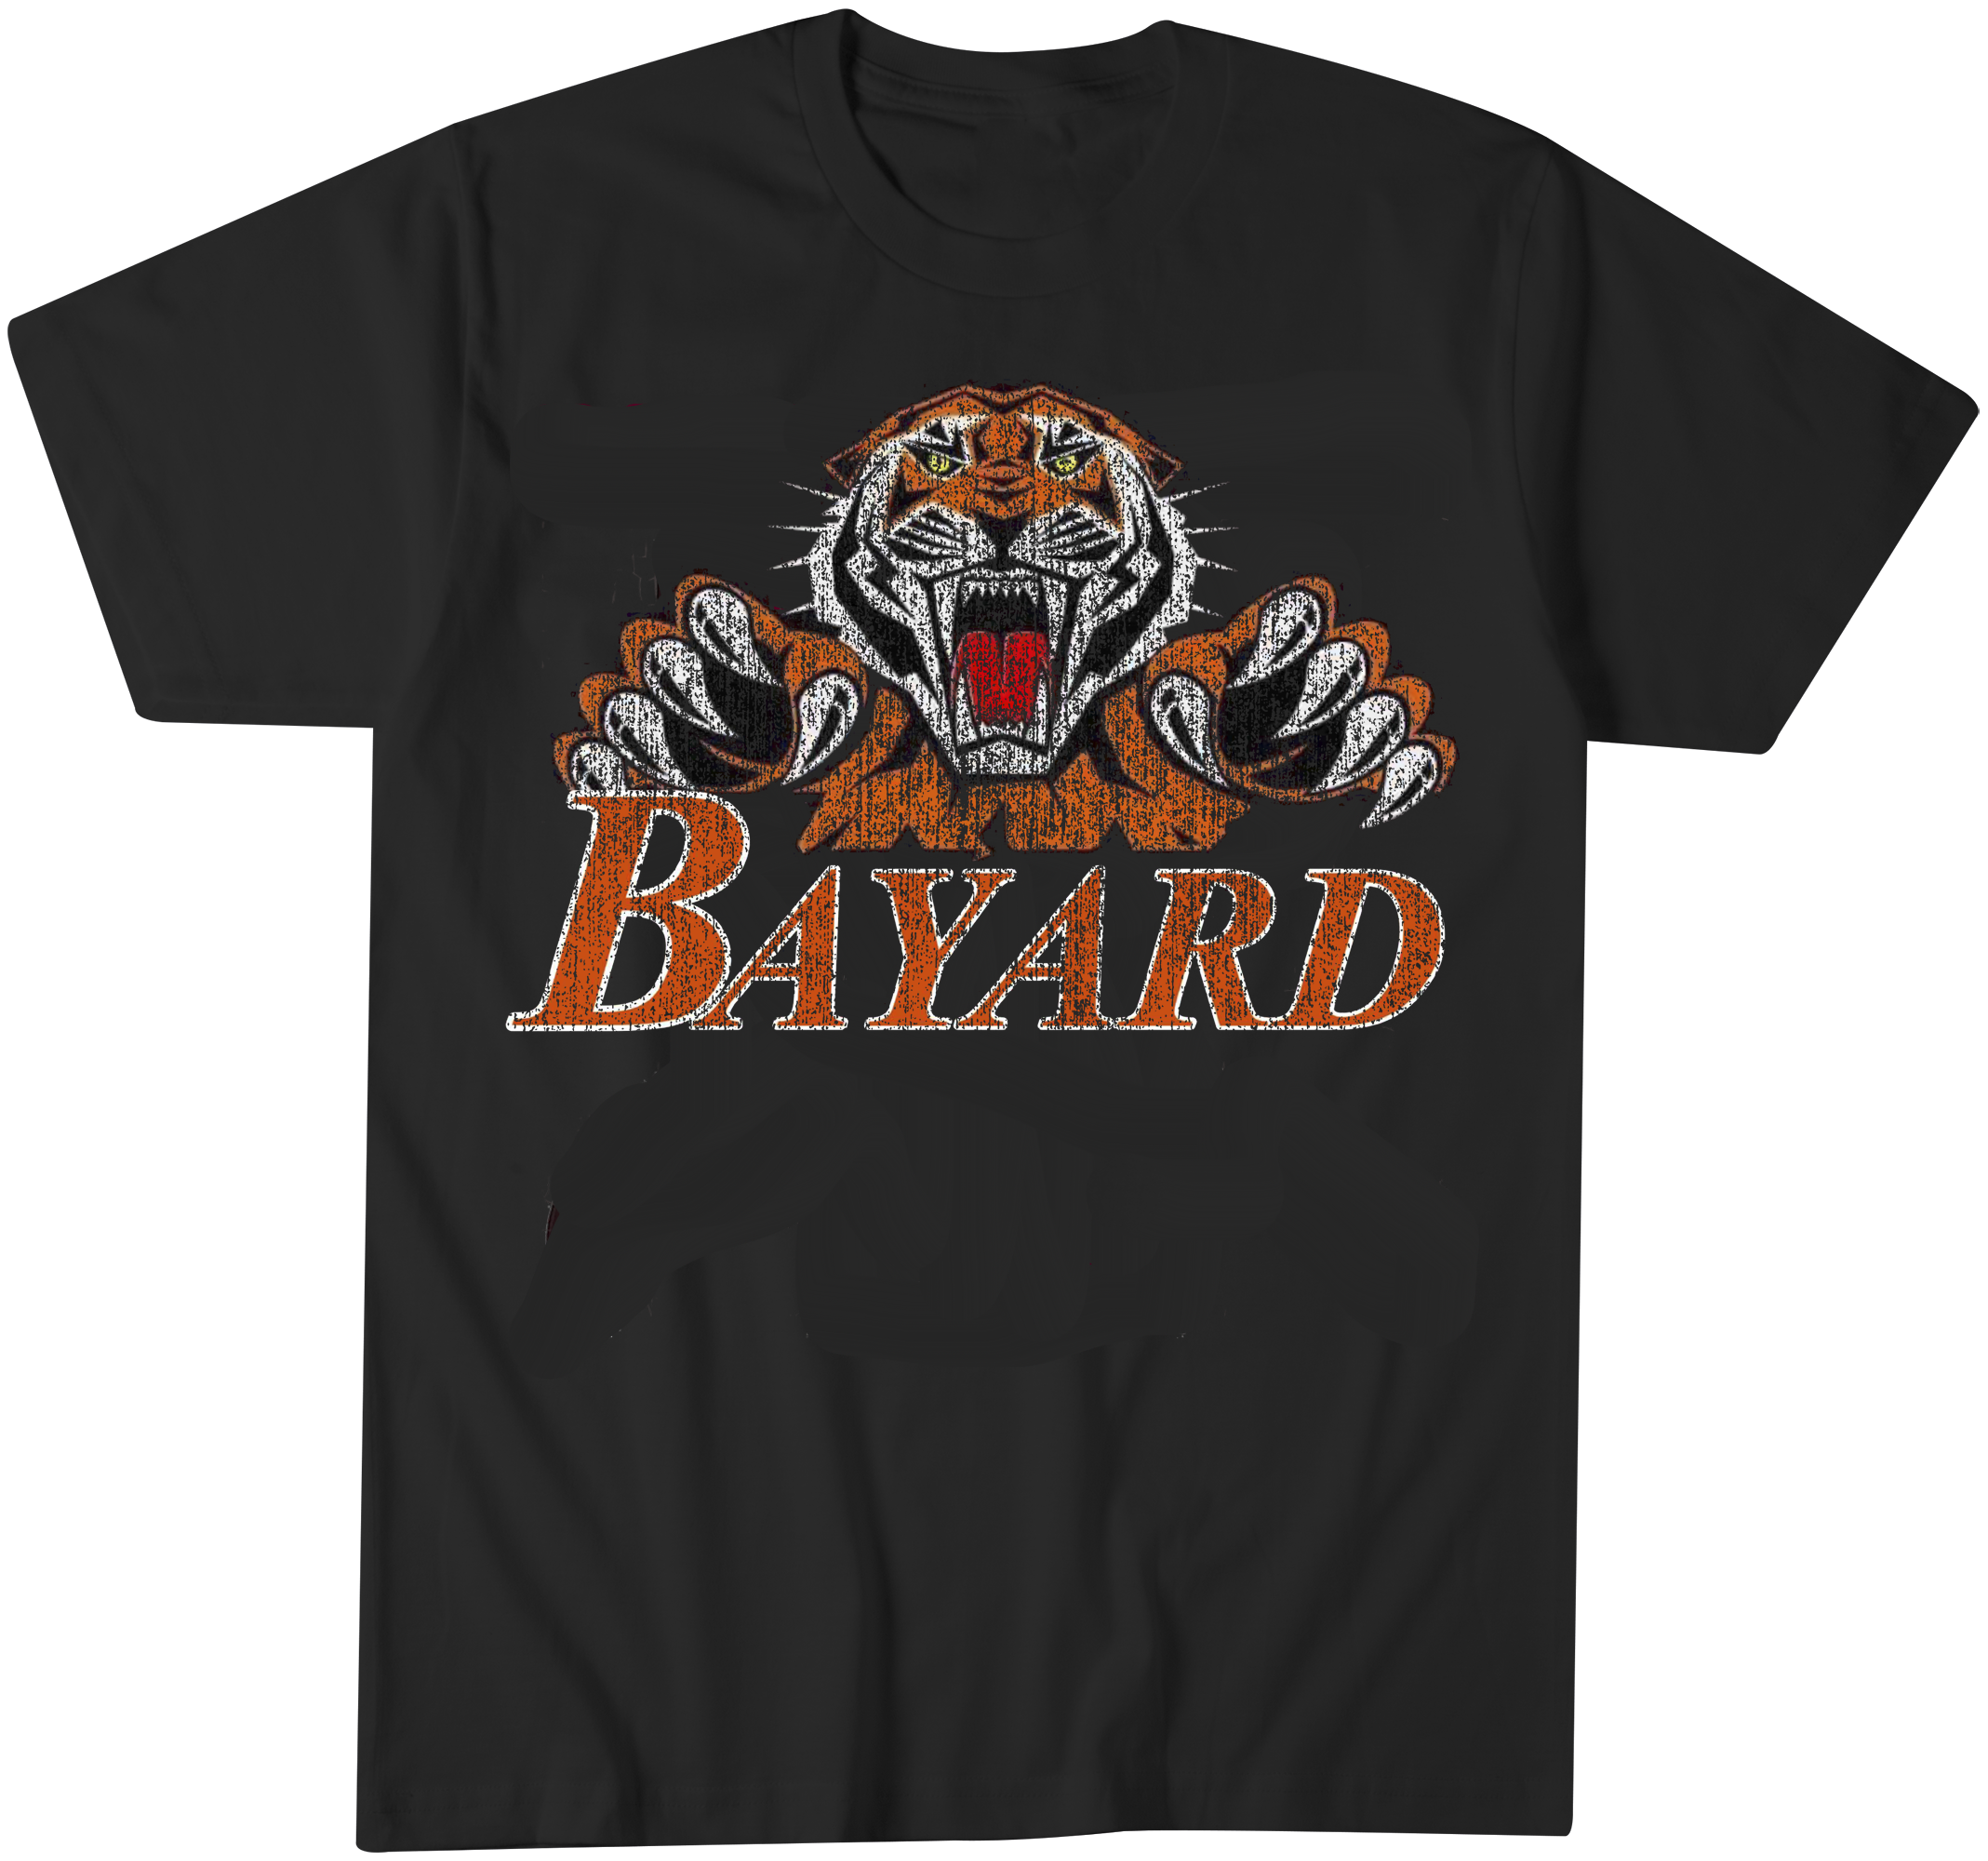 Bayard T-shirt.png